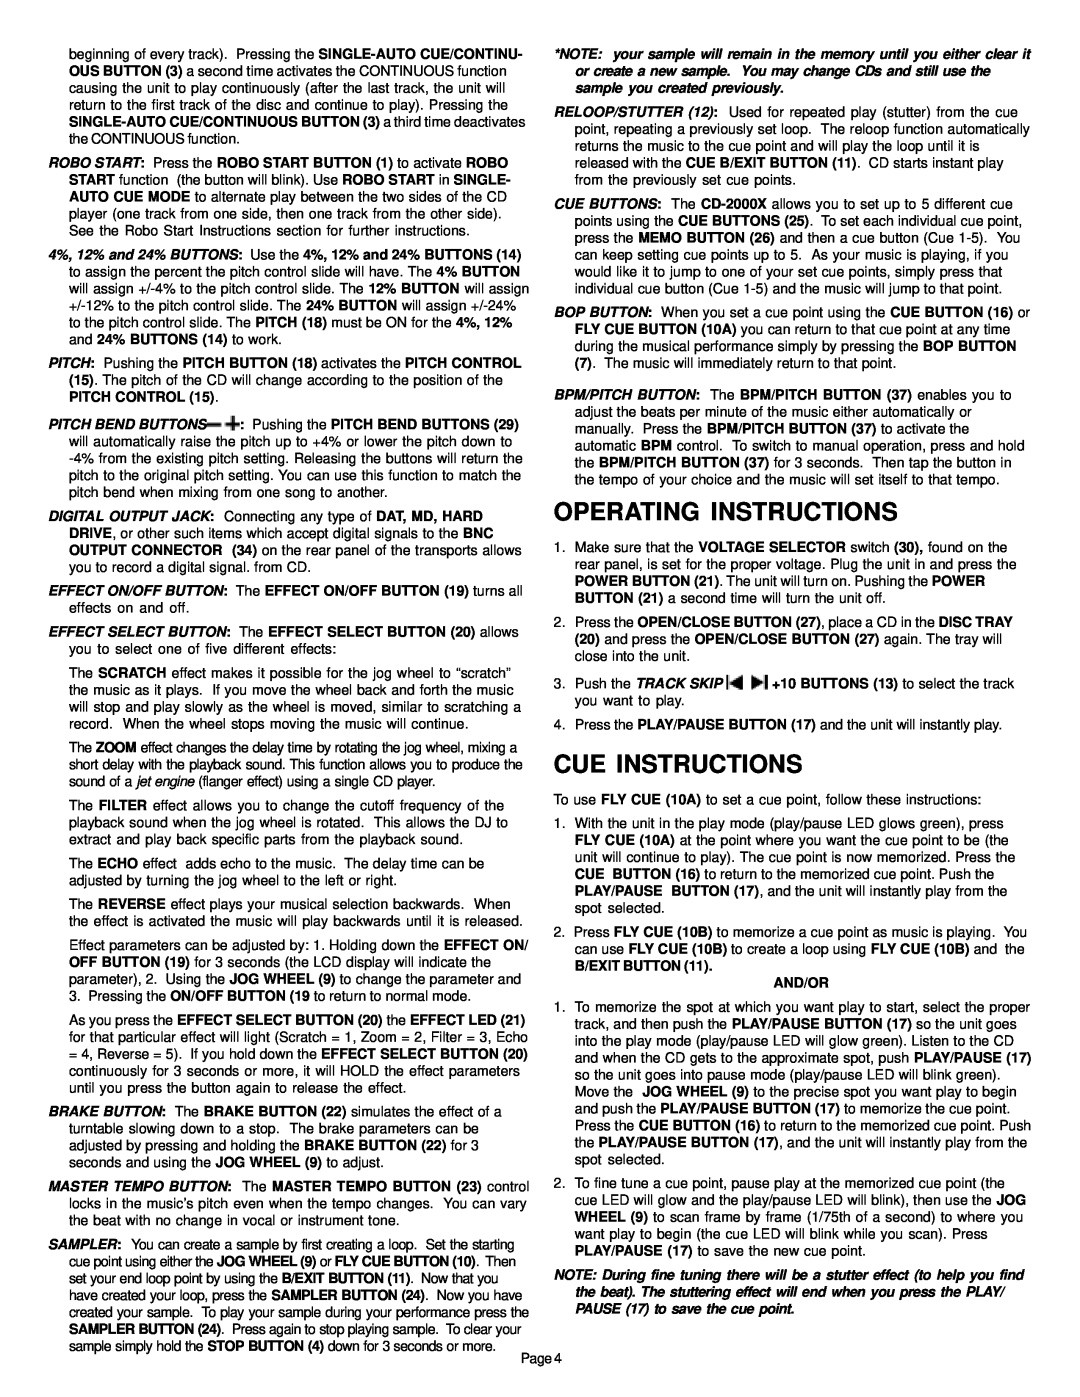 Gemini CD-2000X manual Operating Instructions, Cue Instructions 